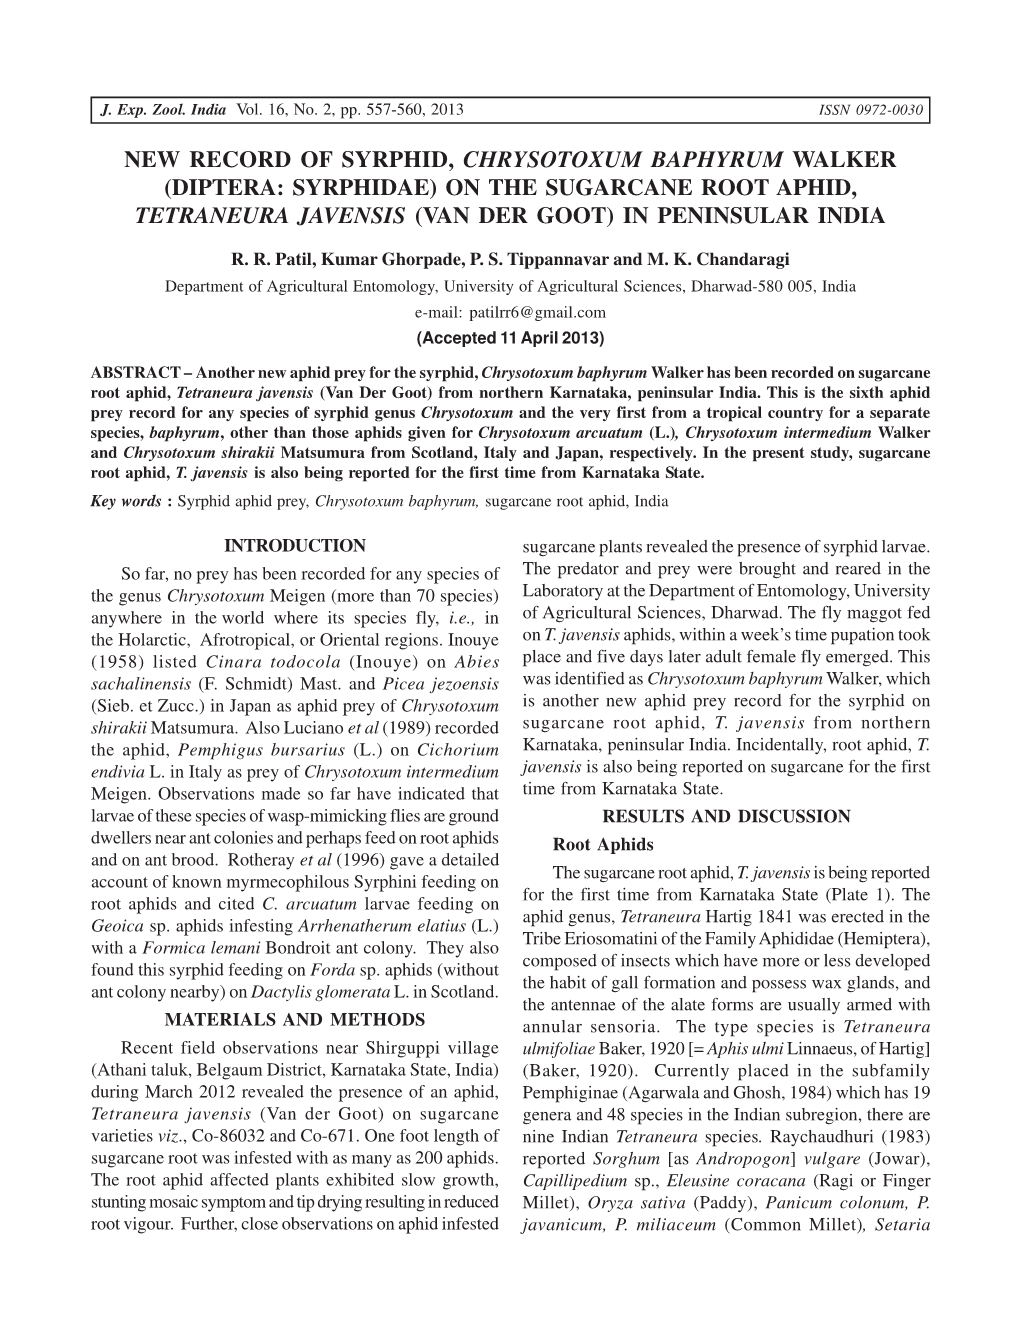 New Record of Syrphid, Chrysotoxum Baphyrum Walker (Diptera: Syrphidae) on the Sugarcane Root Aphid, Tetraneura Javensis (Van Der Goot) in Peninsular India